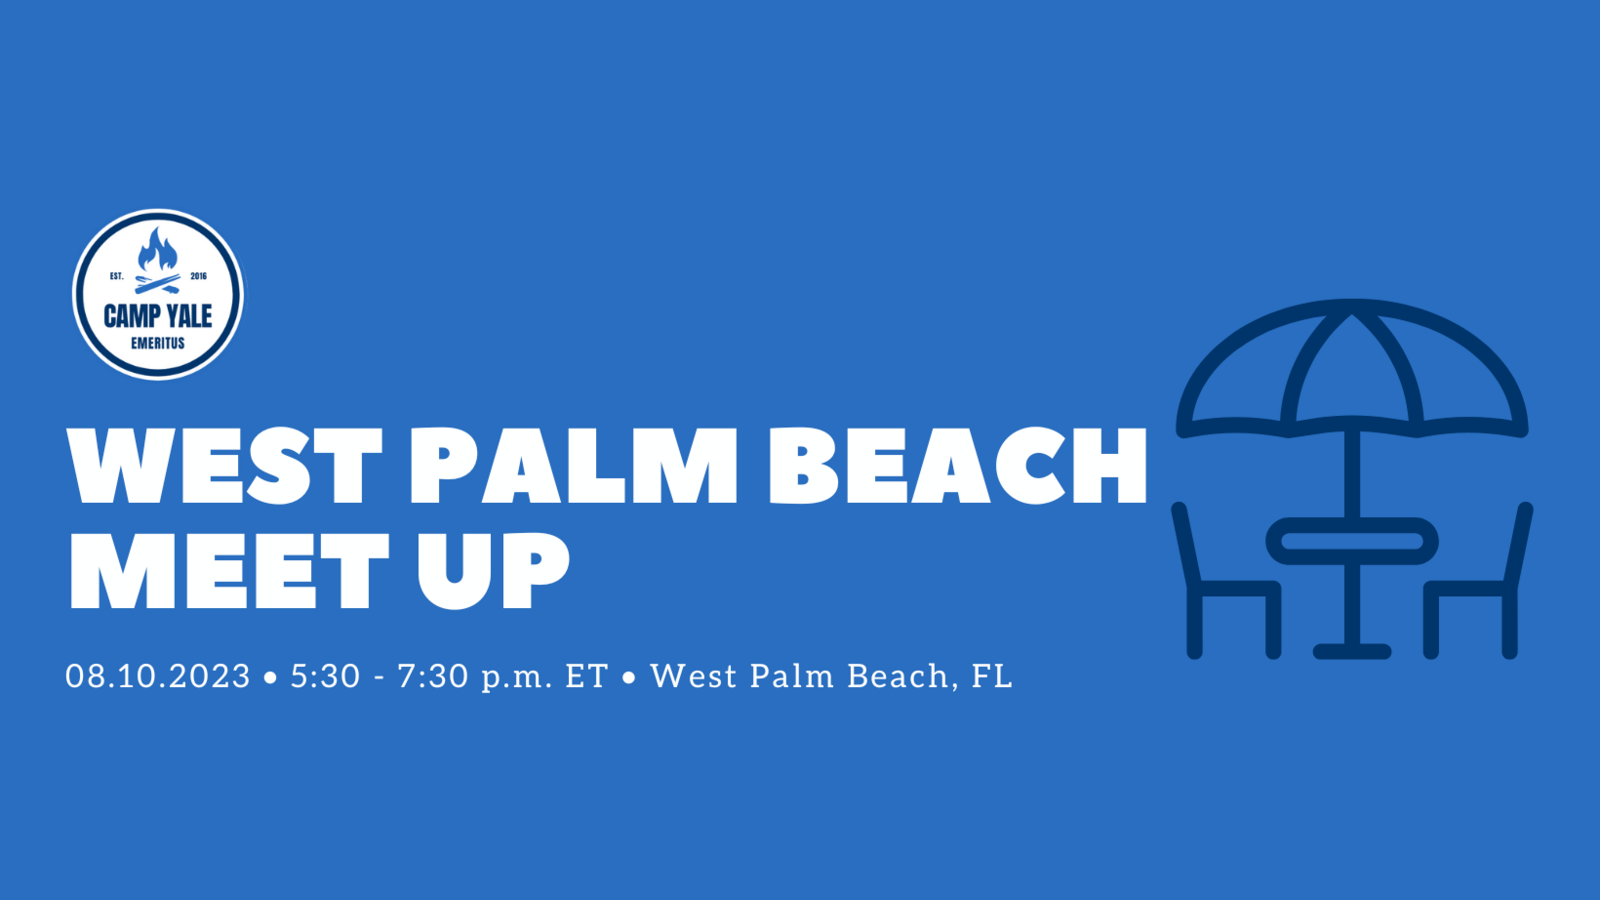 Camp Yale Emeritus 2023: West Palm Beach Meet Up